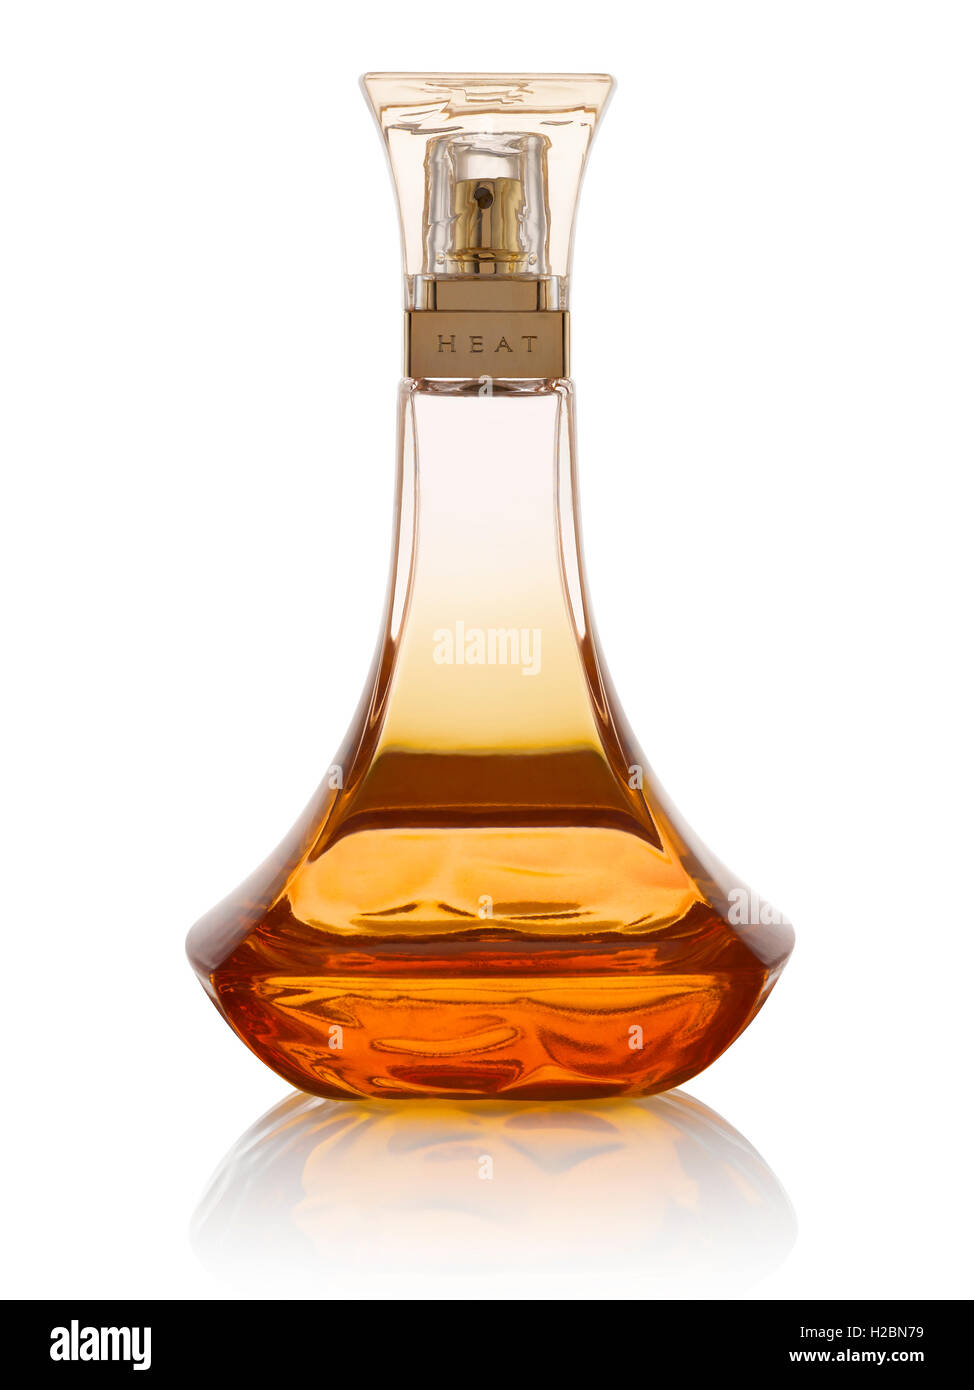 Beyonce Heat Frauen Eau de Parfum Flasche Produktbild mit Reflexion  Stockfotografie - Alamy